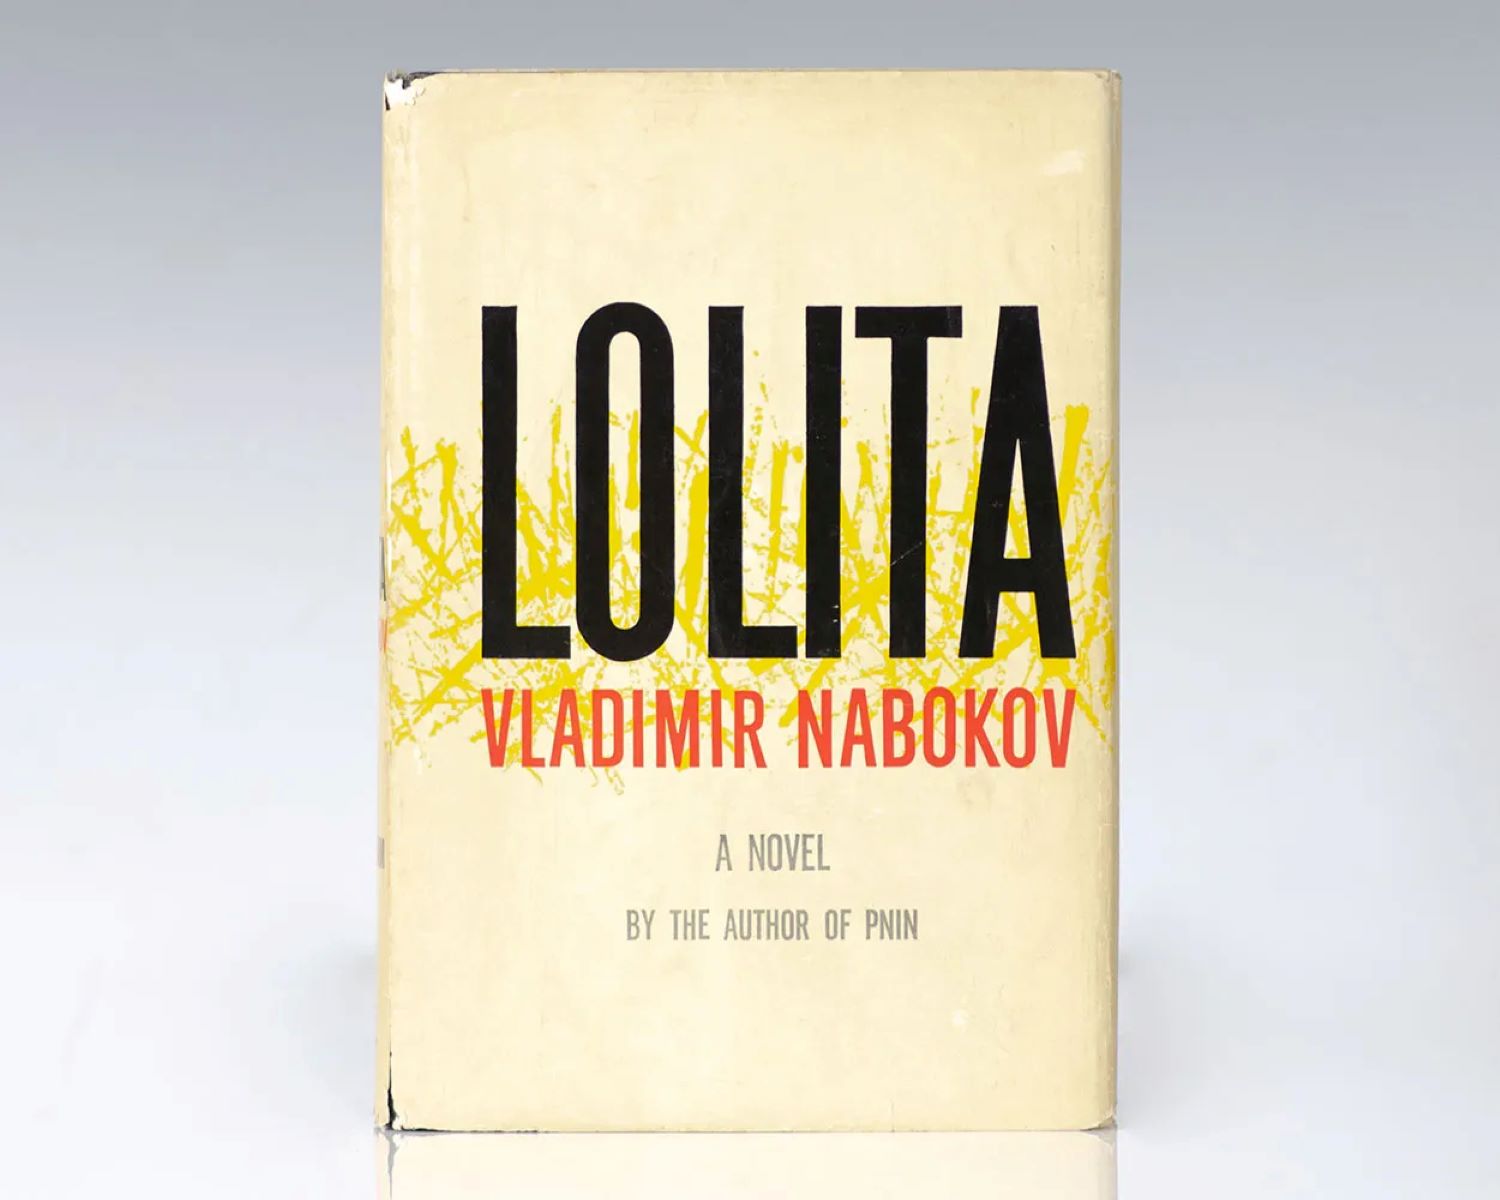 11-astonishing-facts-about-lolita-vladimir-nabokov